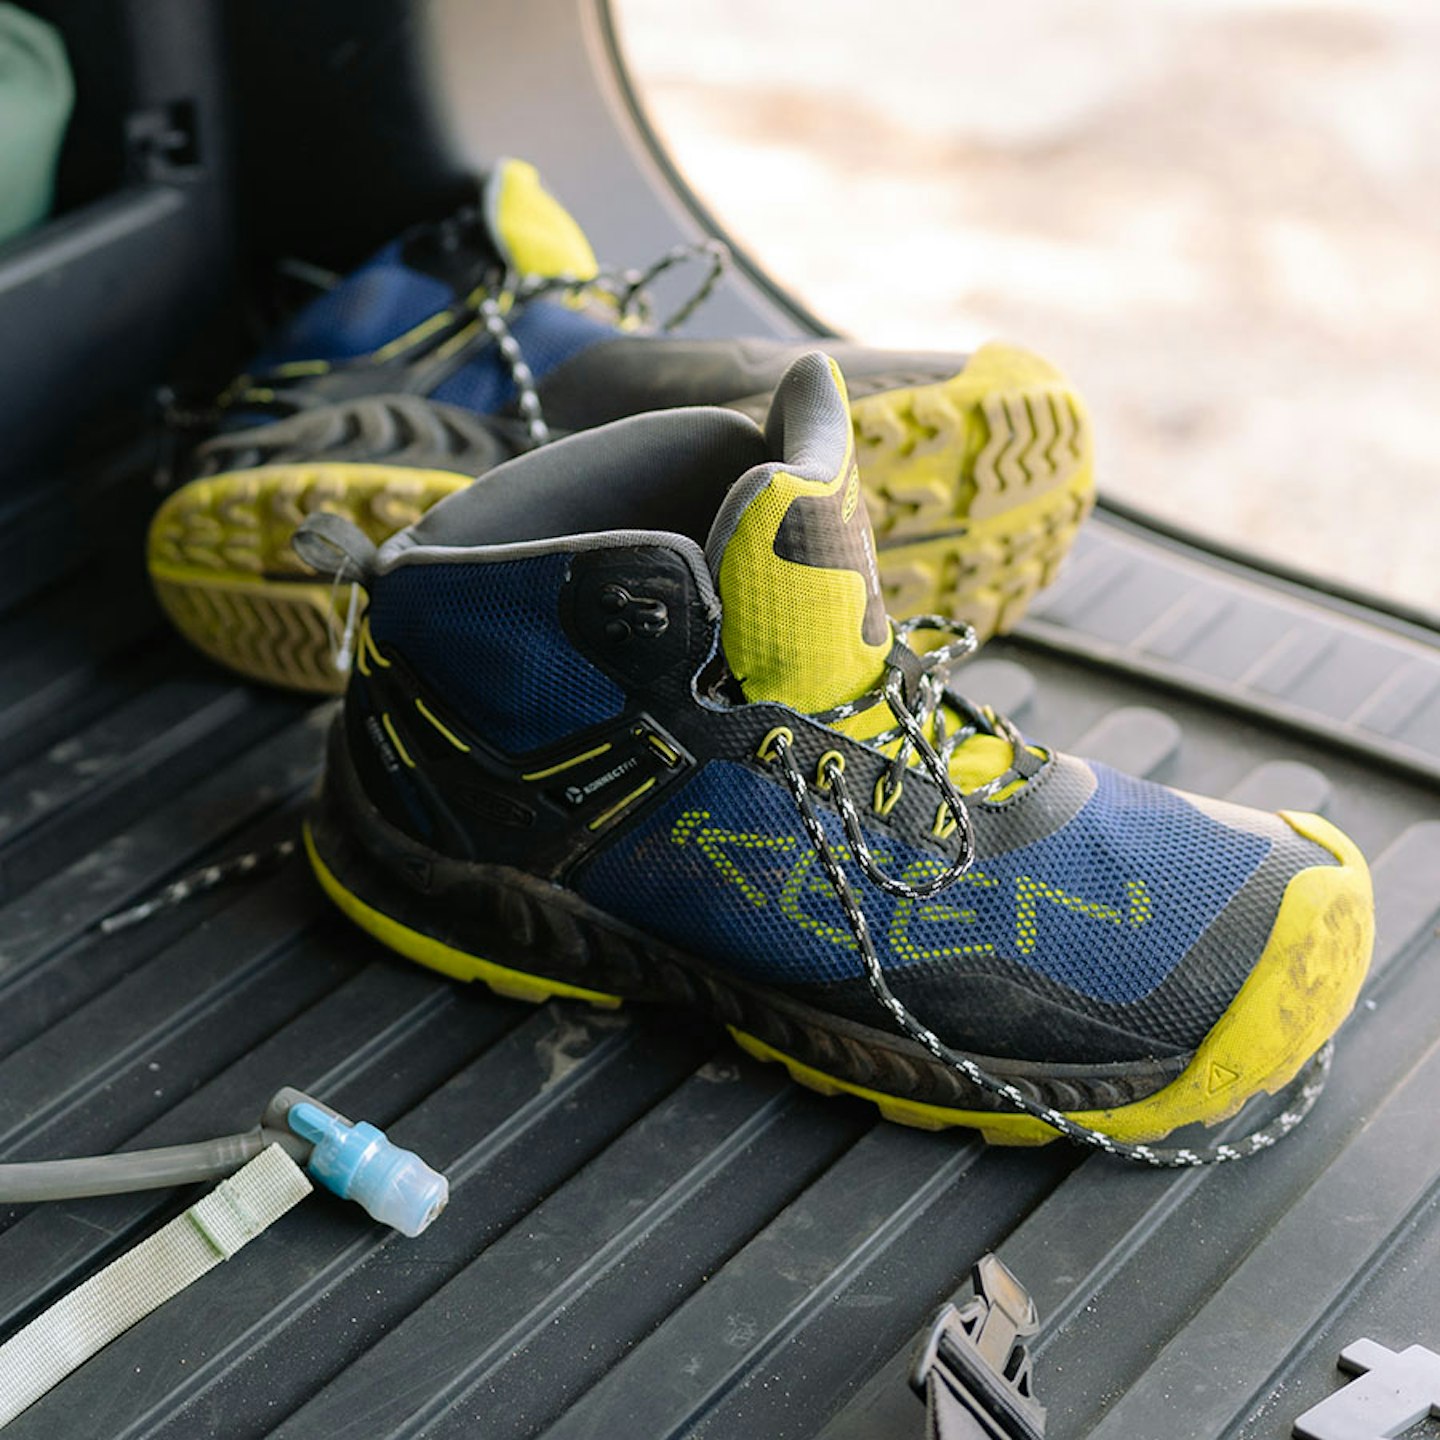 Keen NXIS EVO Mid WP lightweight hiking boot - odour management